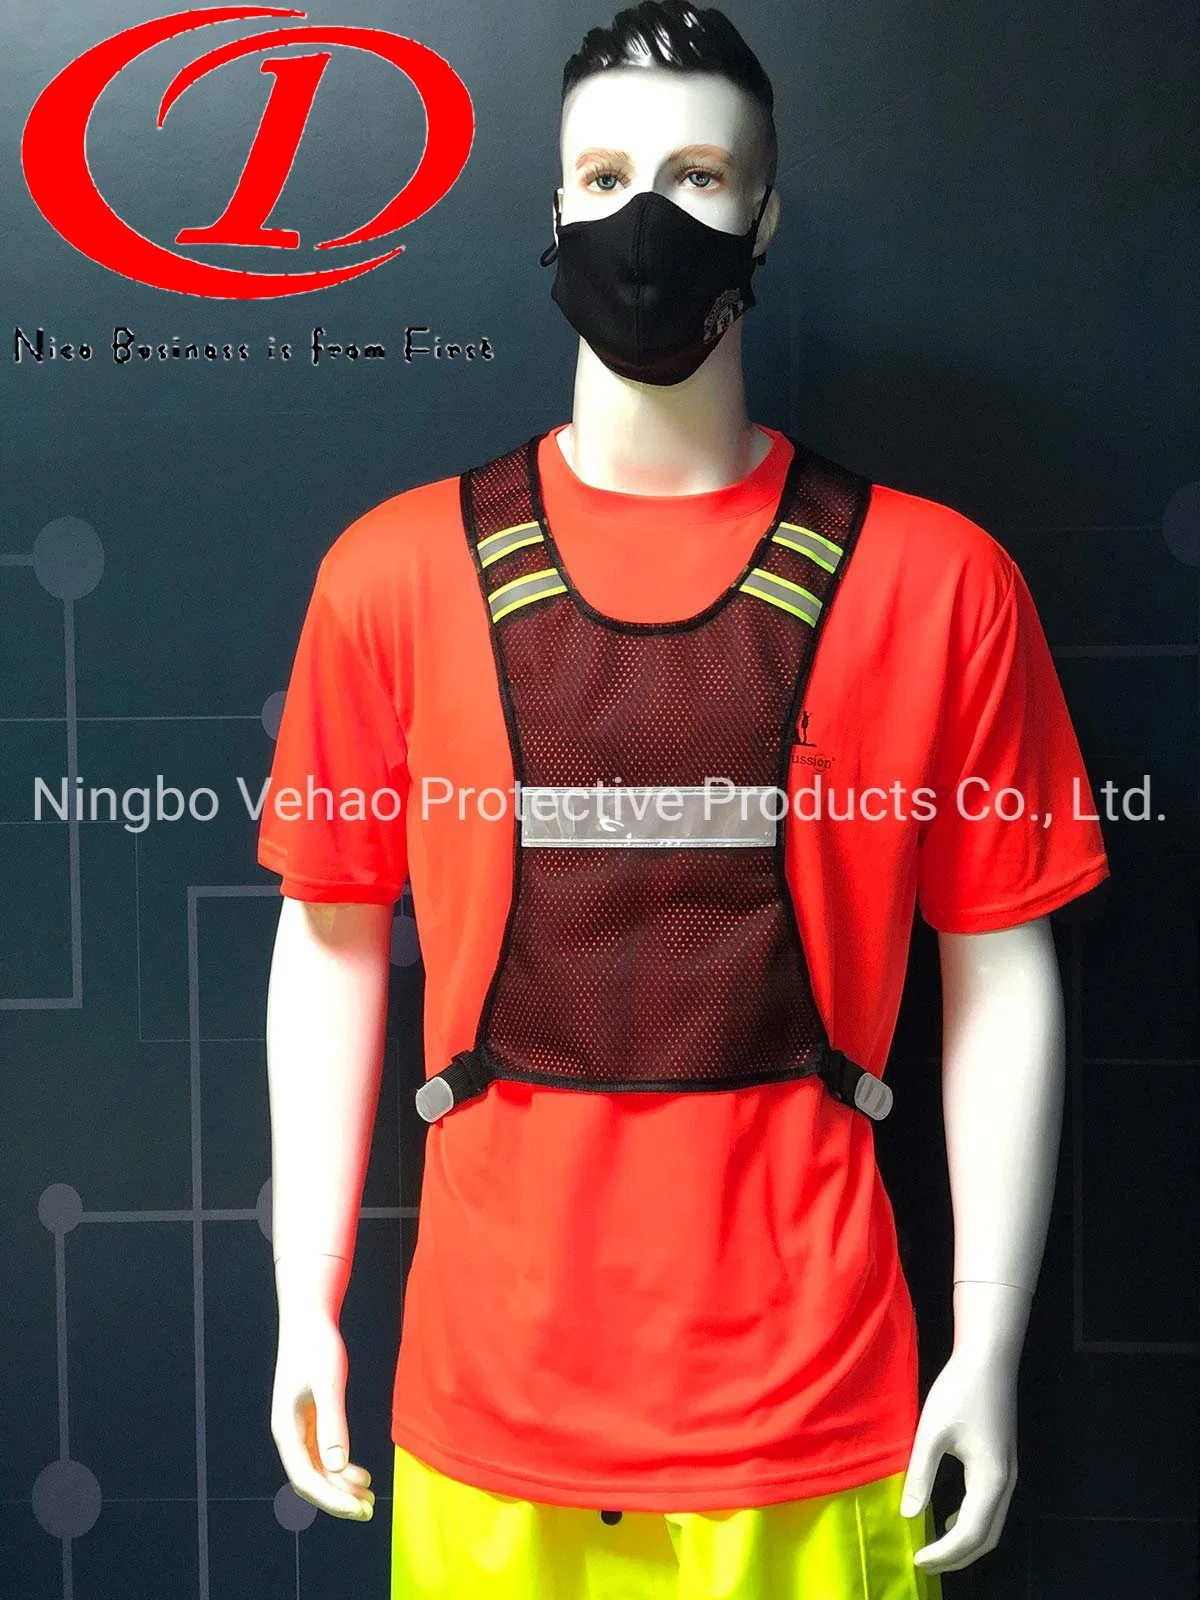 LED Safety Vest with Reflective Warning Band